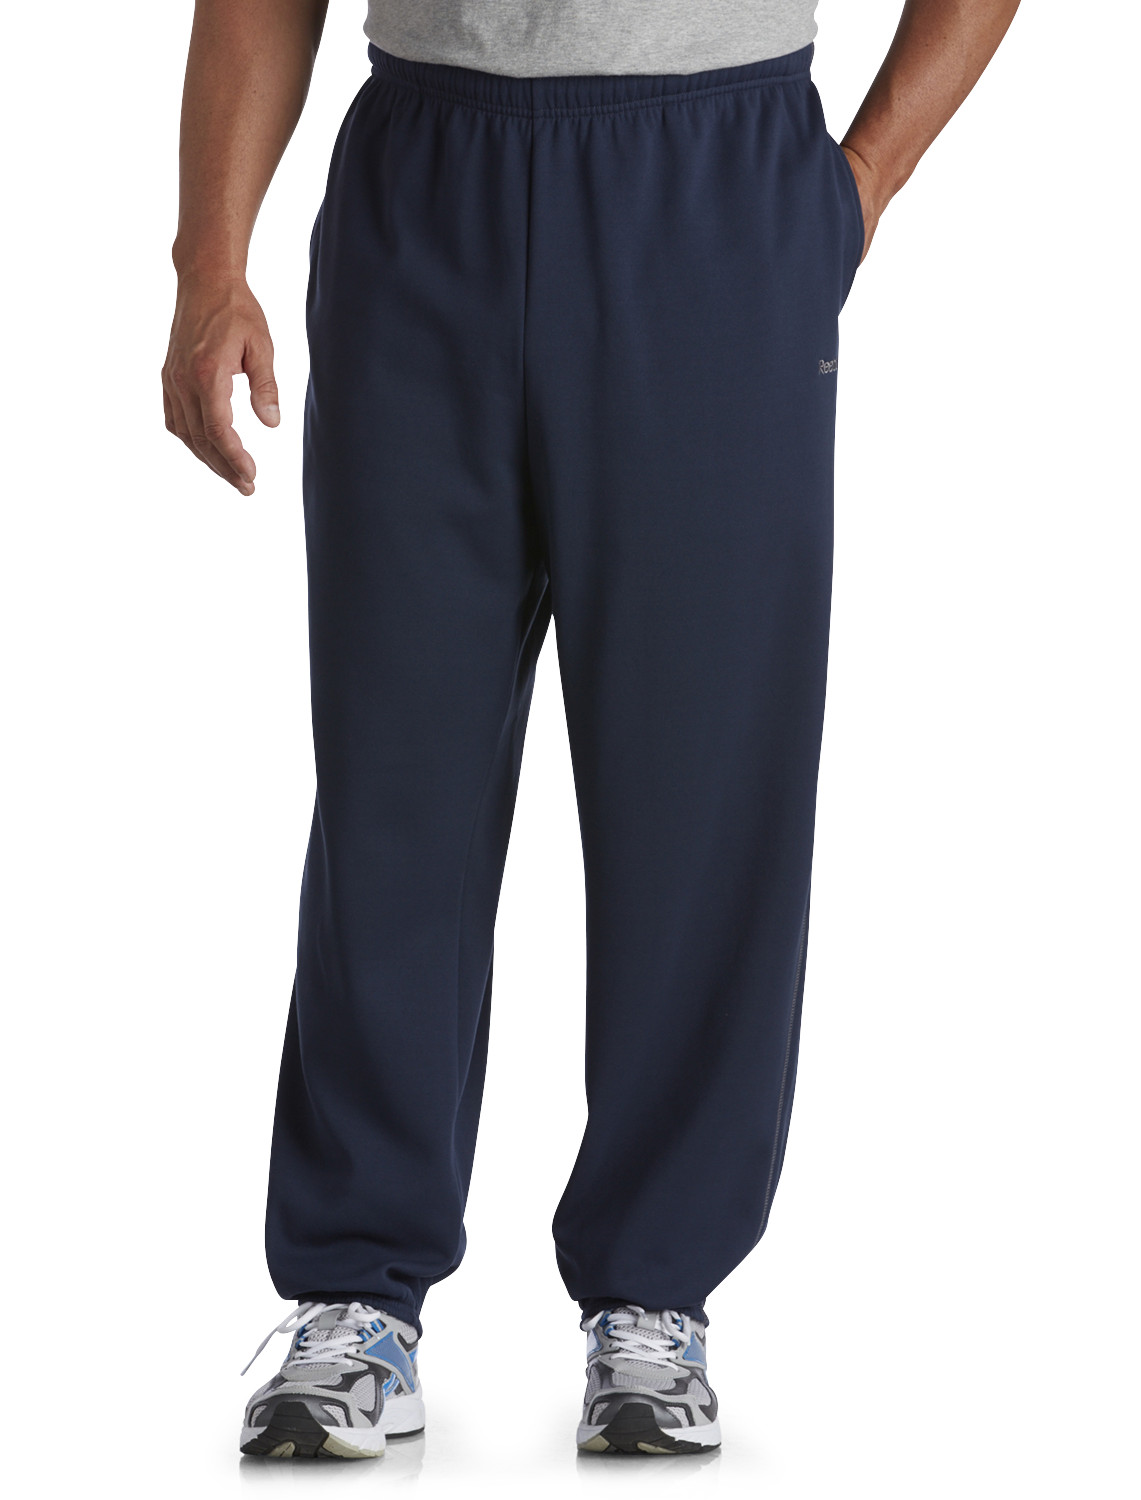 Reebok PlayDry Fleece Pants Casual Male XL Big & Tall | eBay